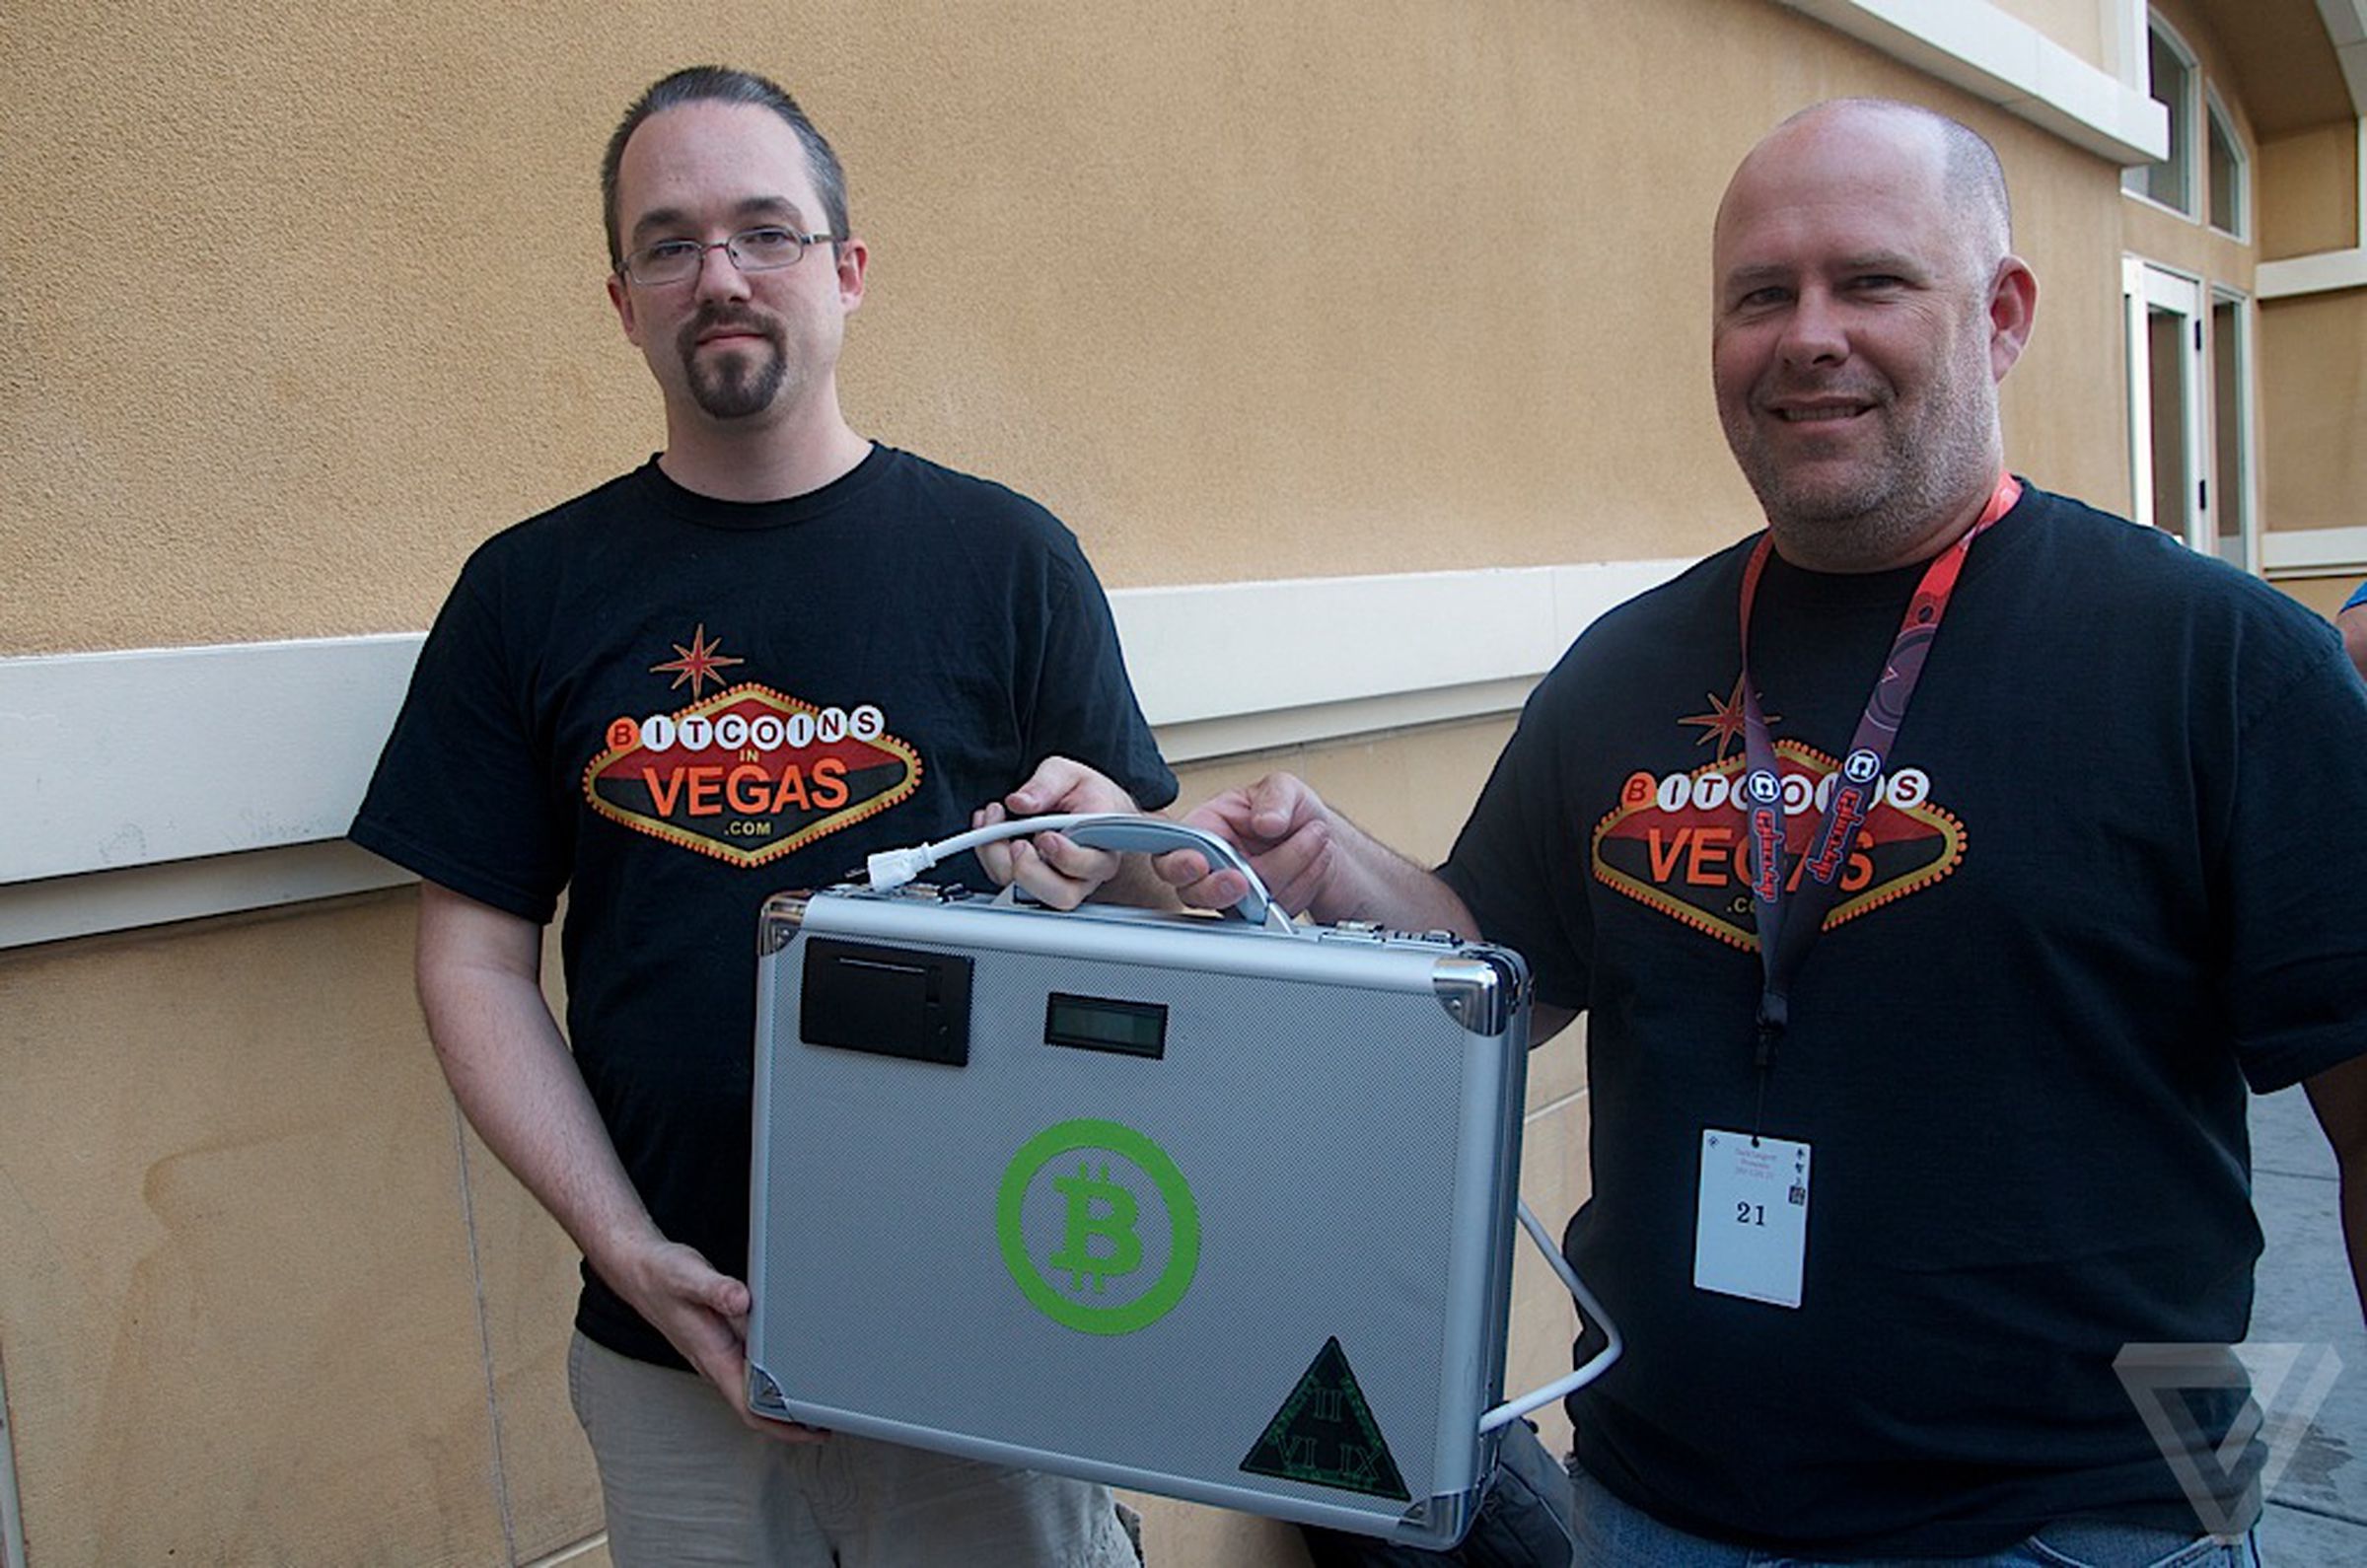 Bitcoin suitcase at Def Con